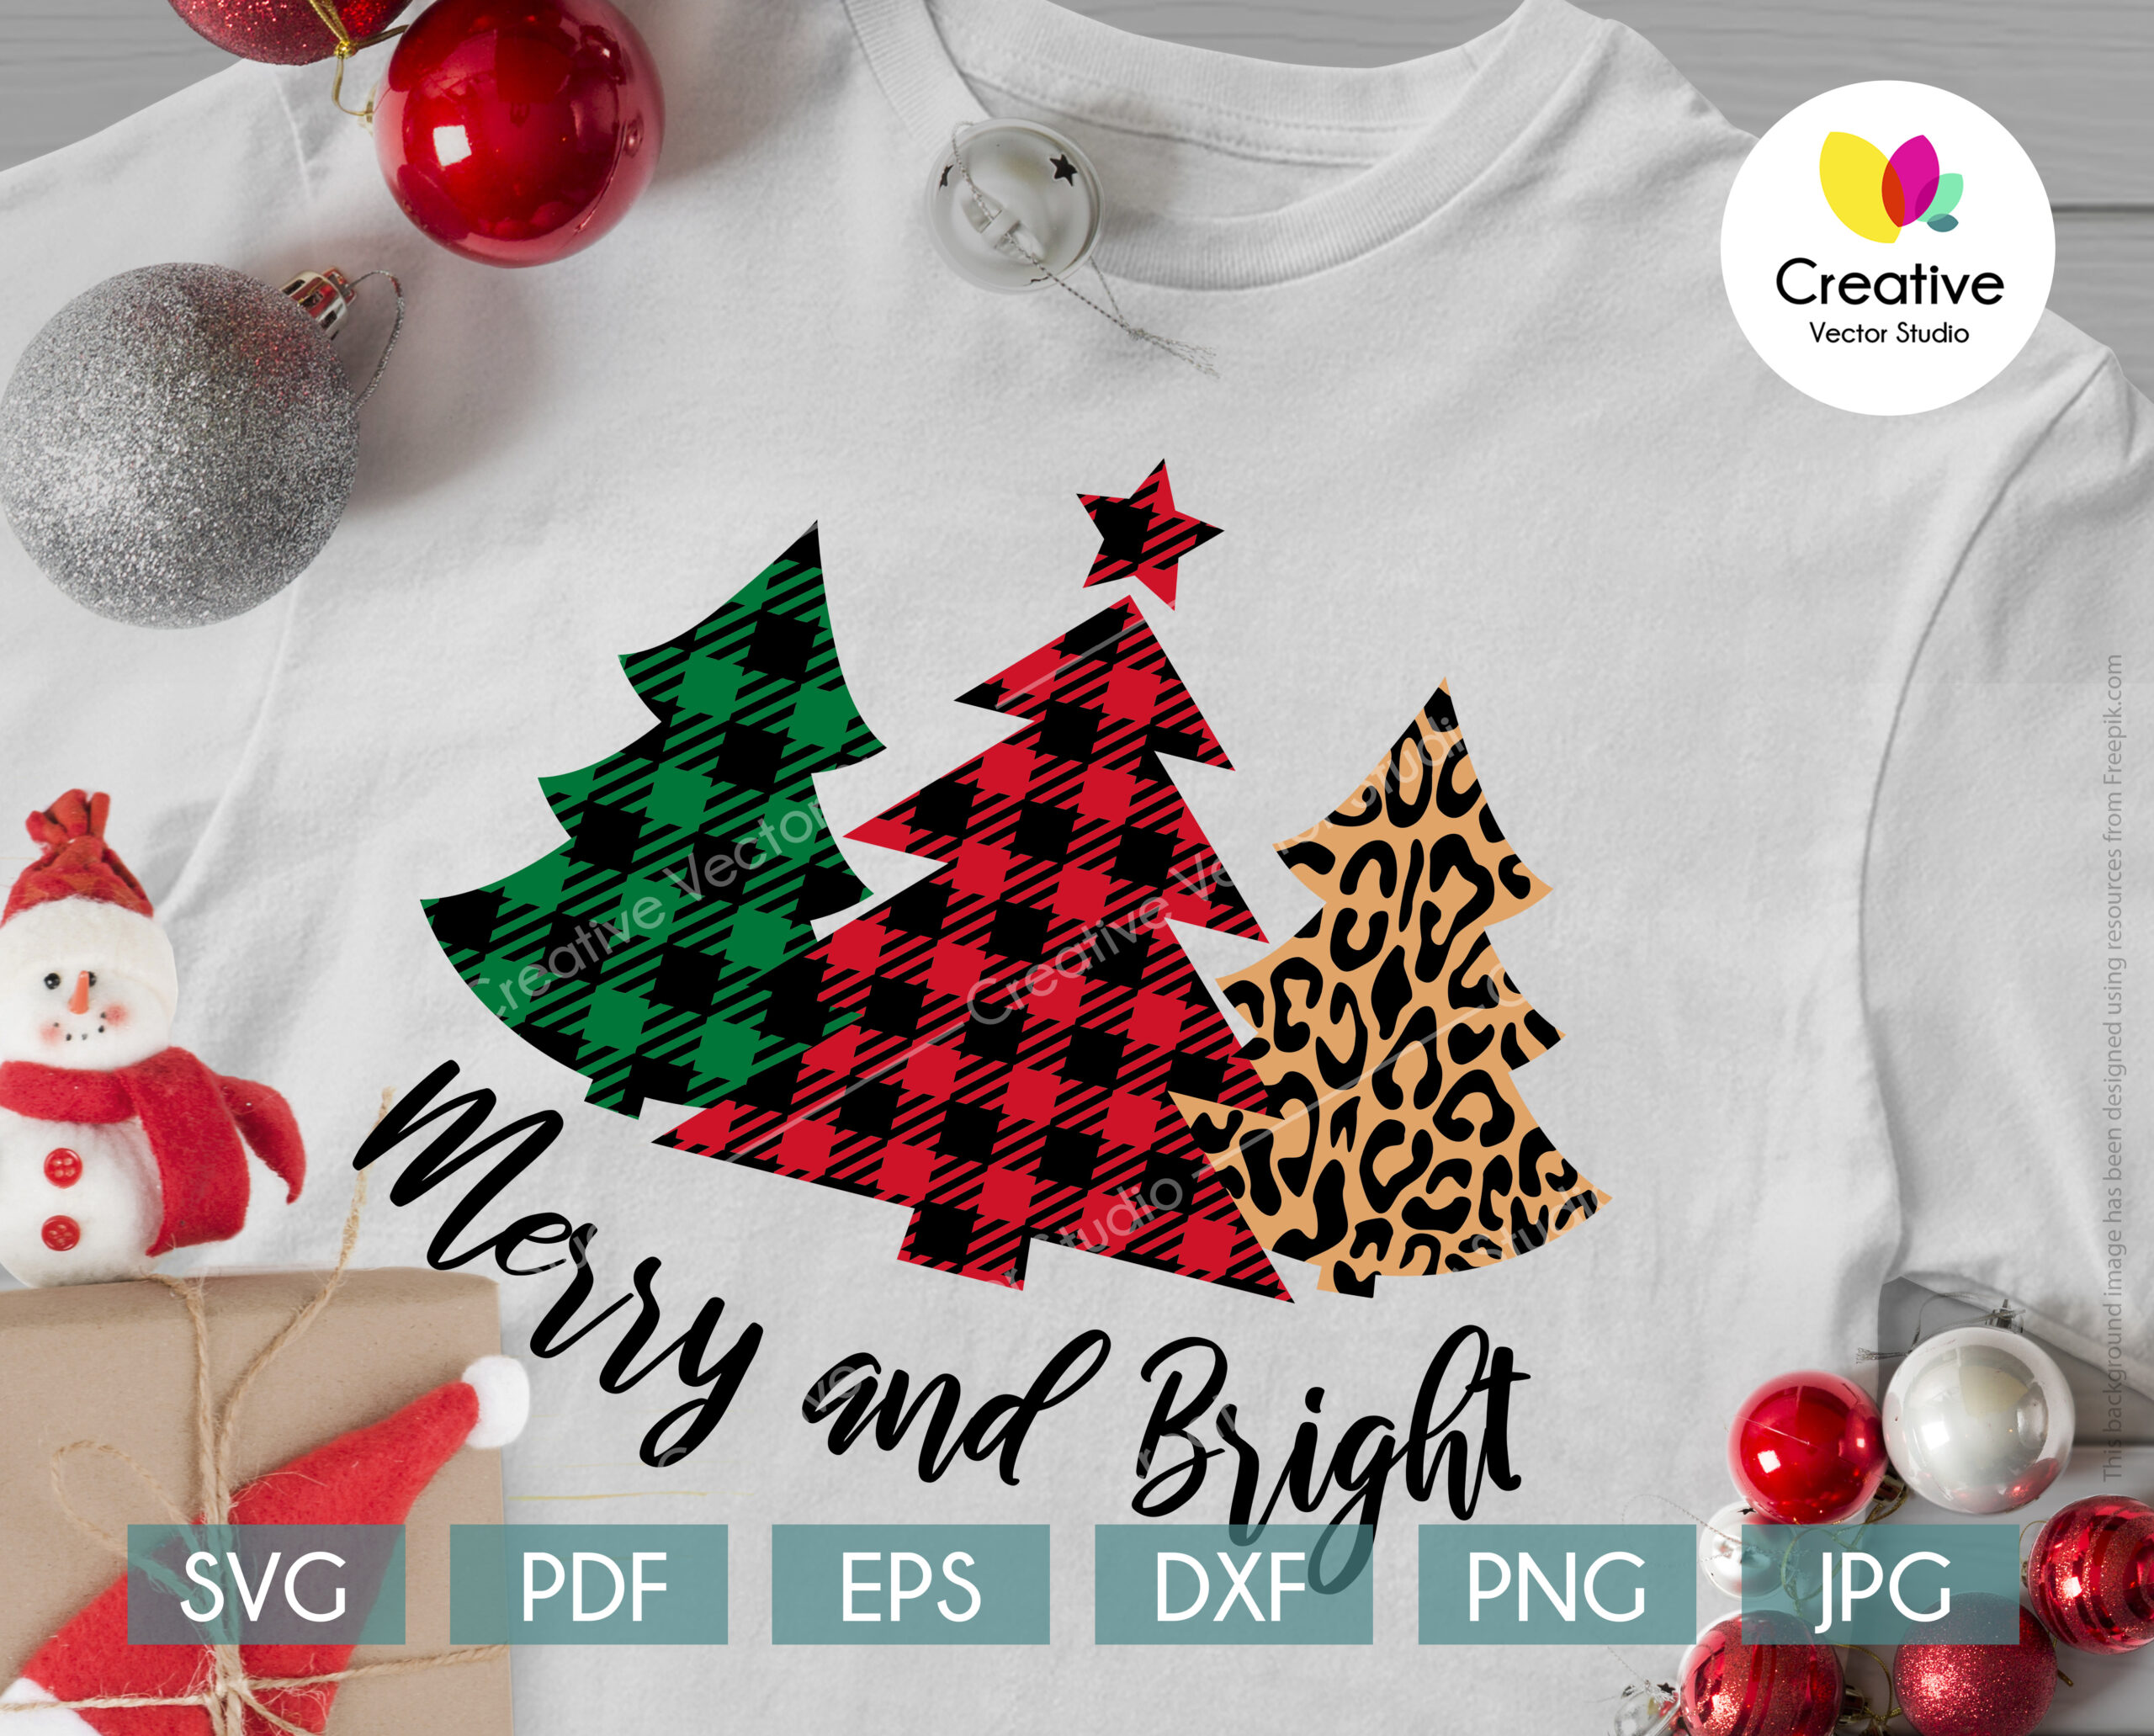 Christmas Tree Svg Christmas Jumper Svg Christmas Shirt Svg Christmas Svg Winter Svg Christmas Gift Merry Christmas SVG PNG PDF